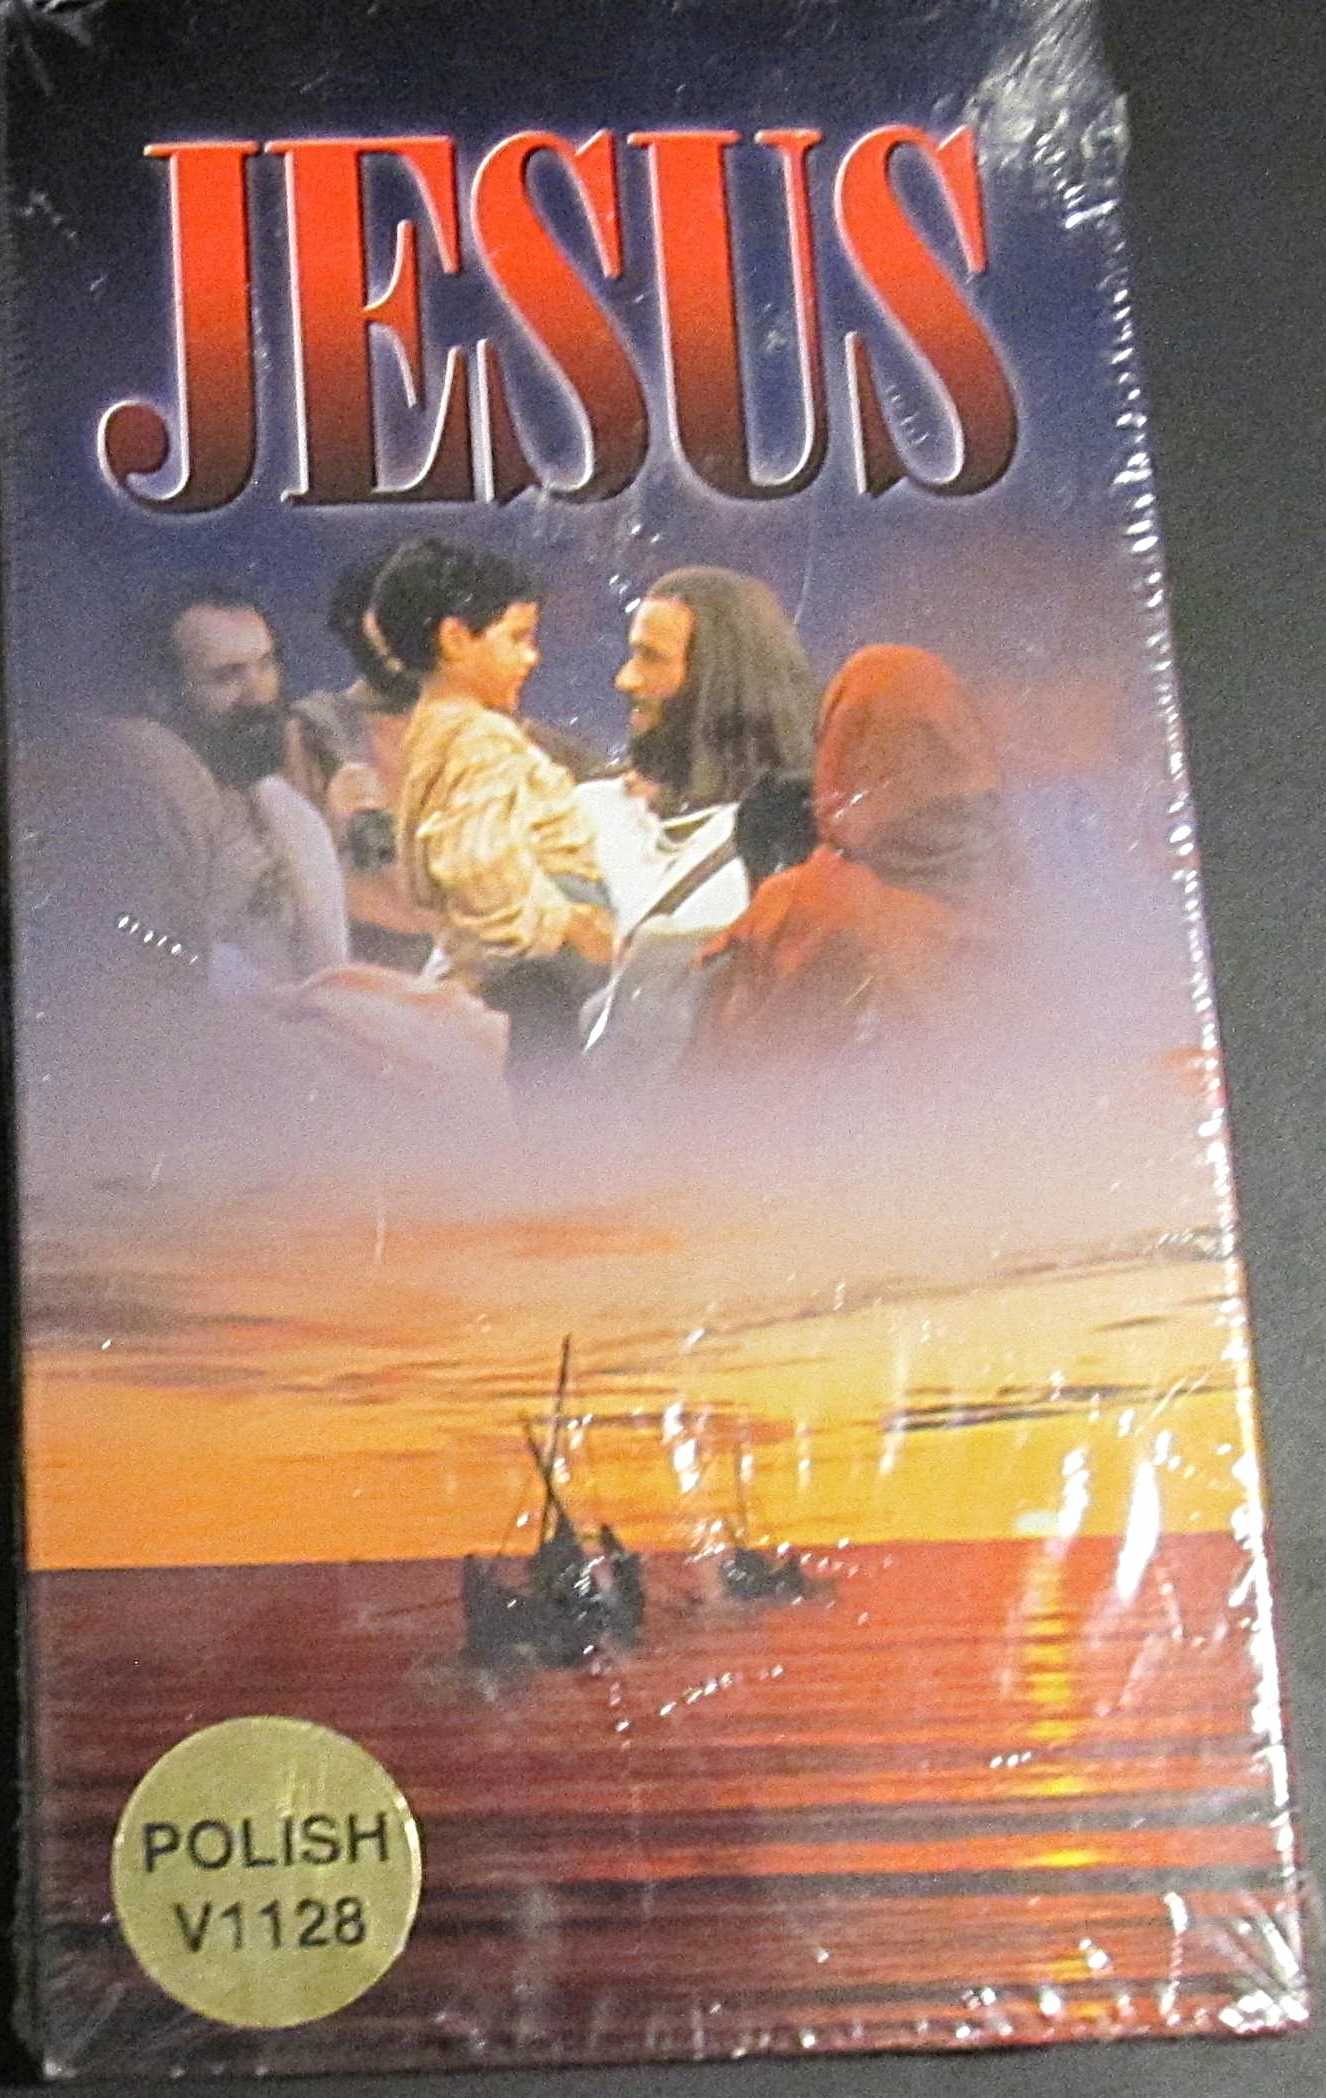 Jesus/Jezus VHS 1979